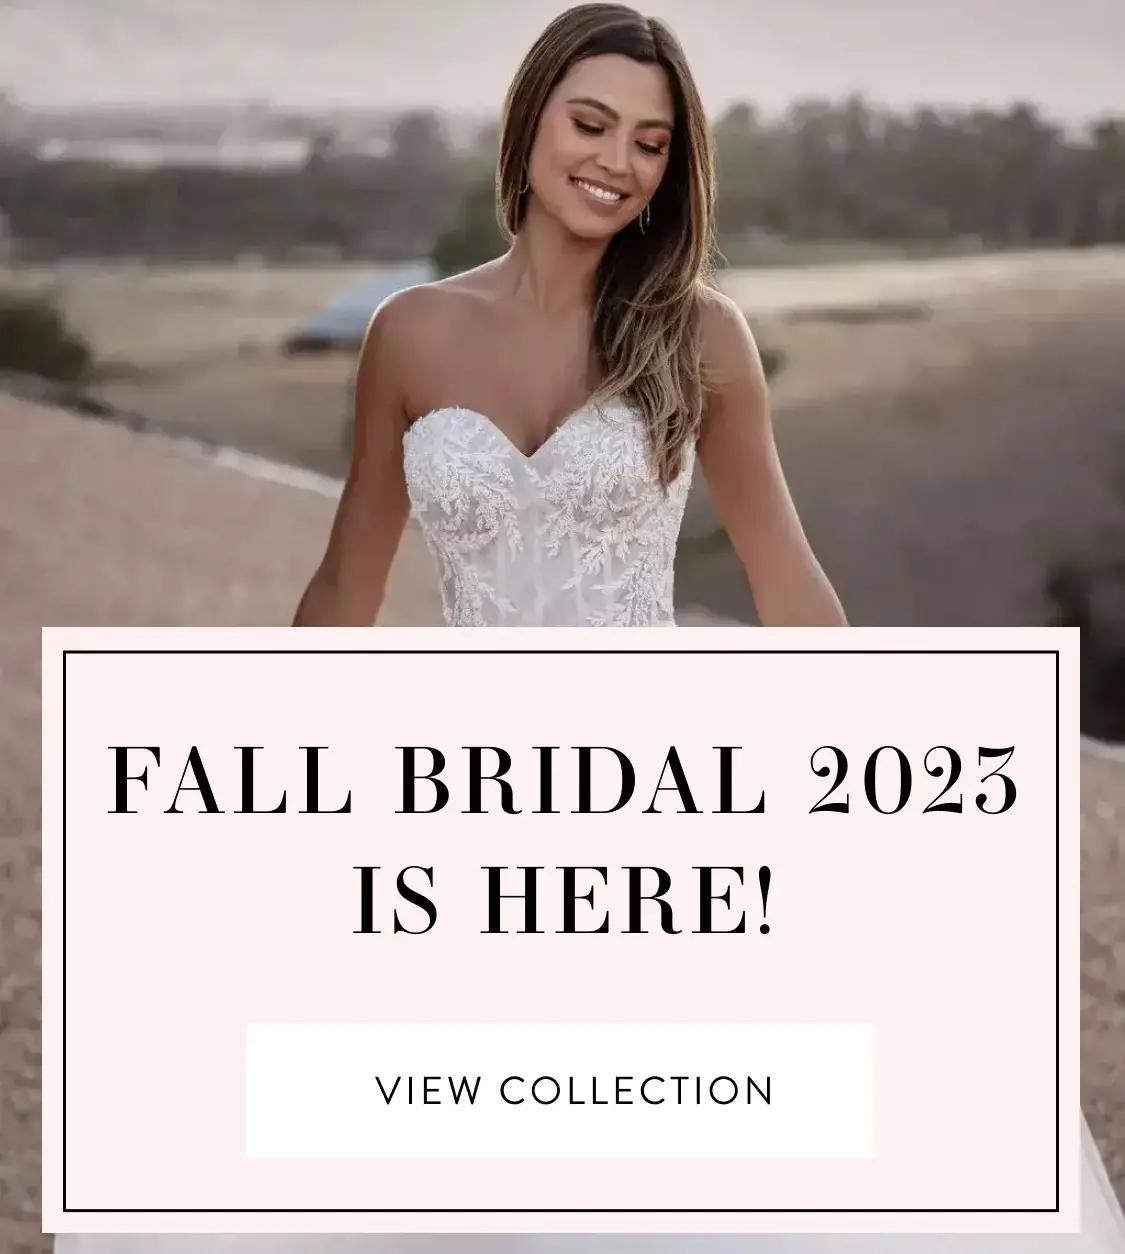 Bridal 2023 Banner for mobile